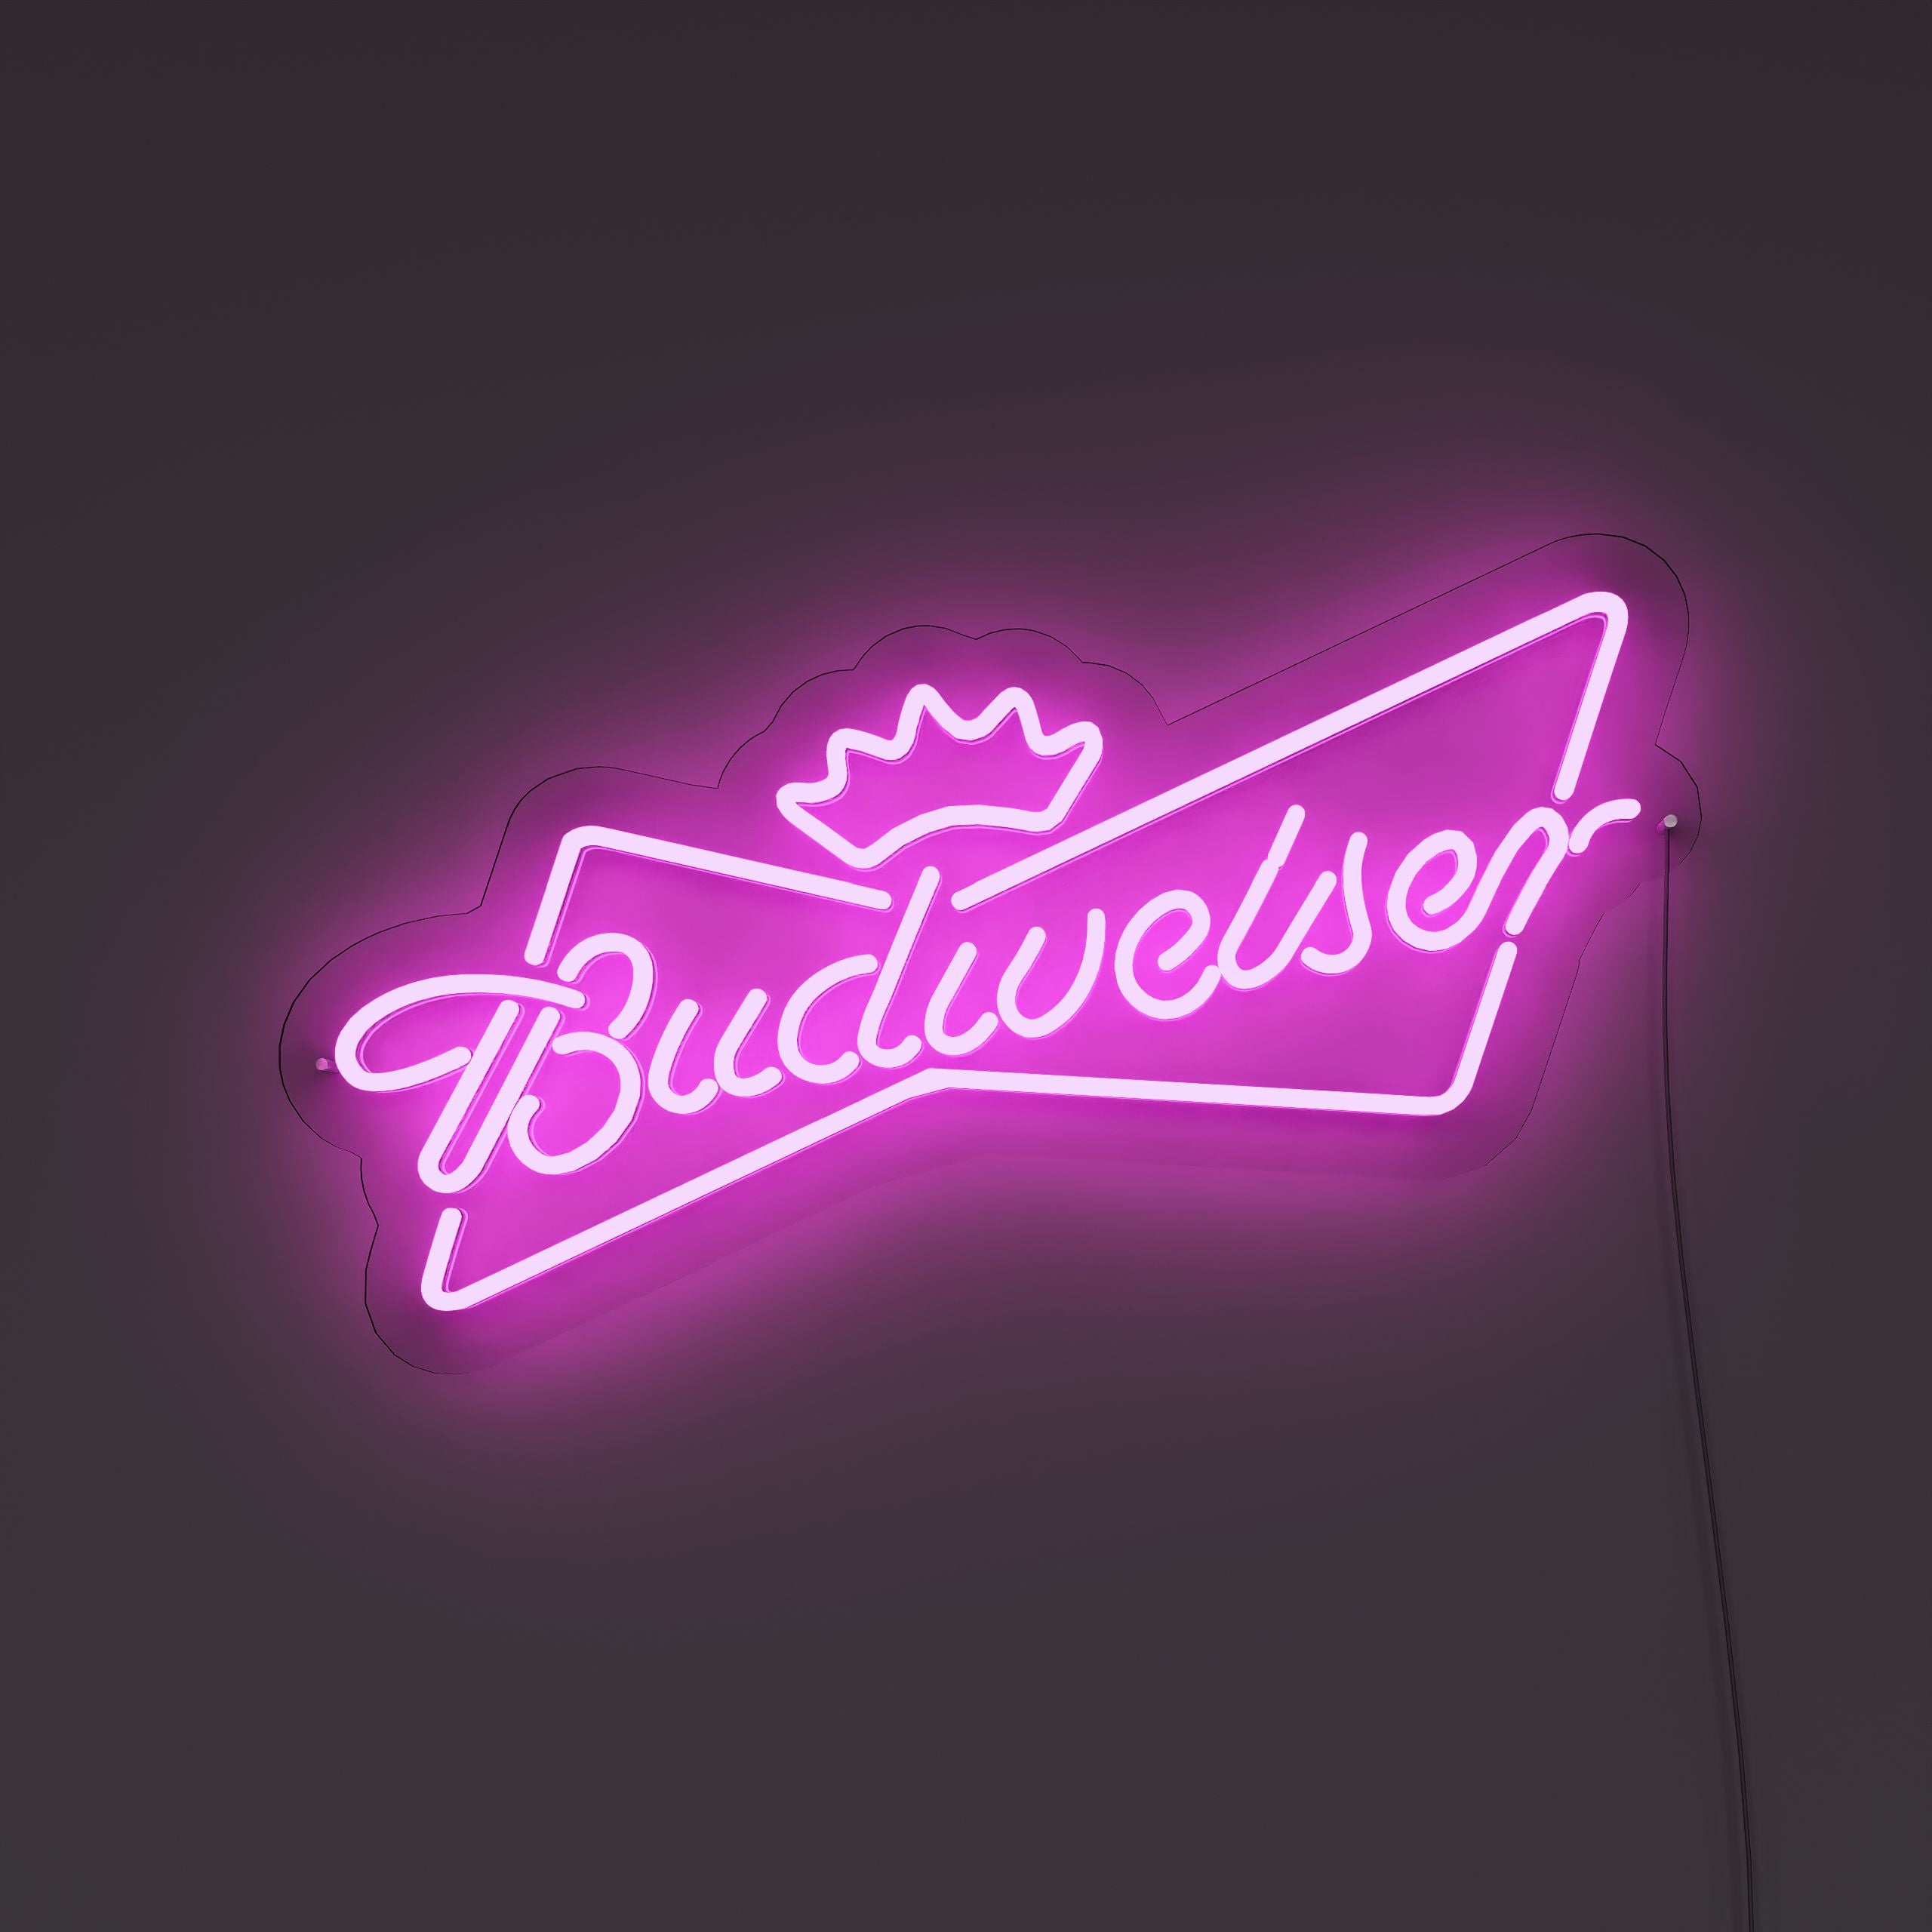 tbudweiser-neon-signs-Fuchsia-Neon-sign-Lite